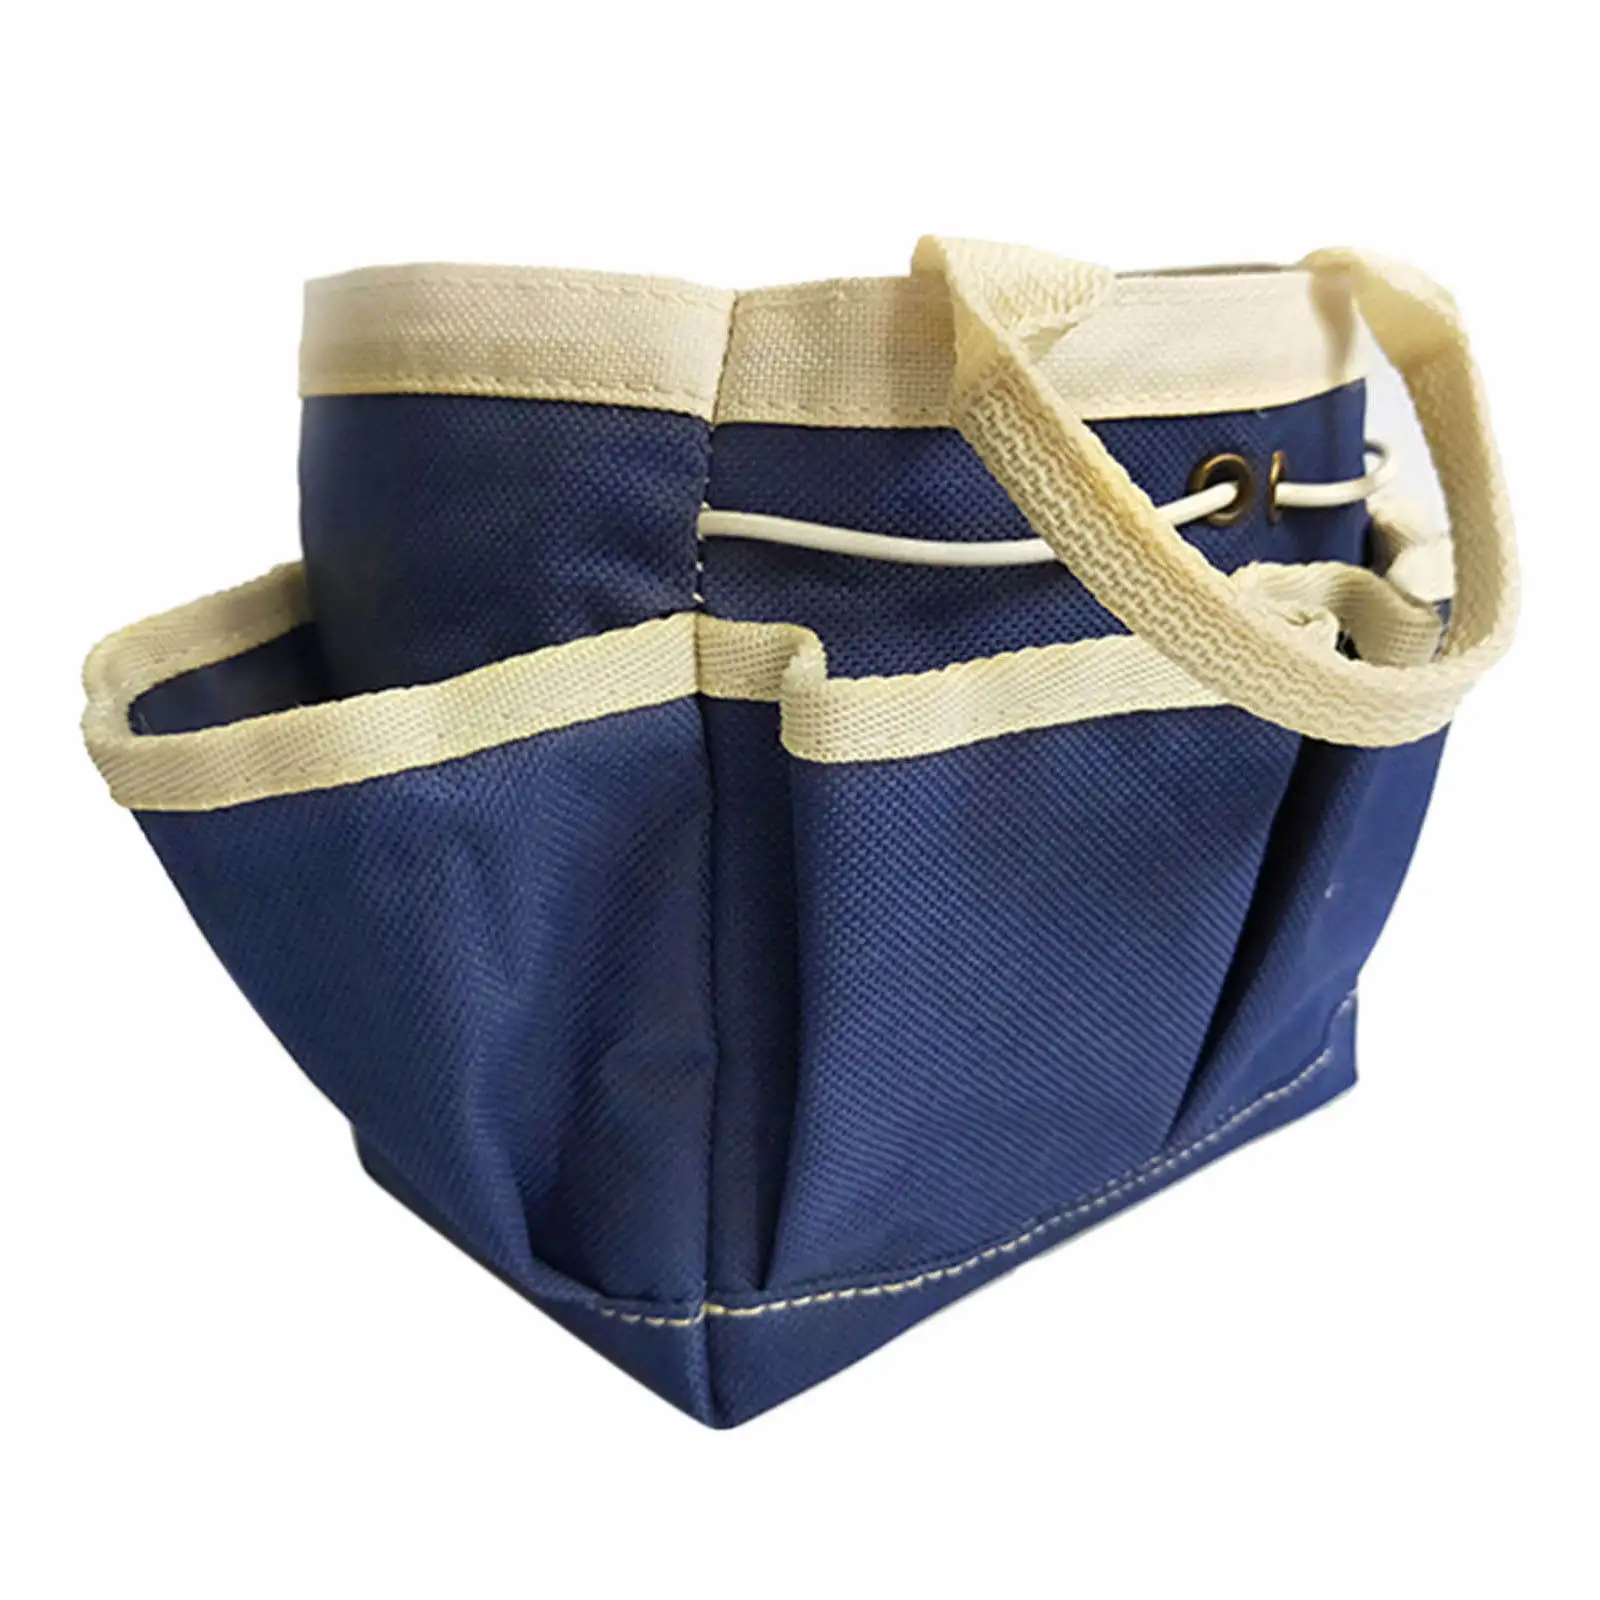 Garden Tool Bag Weaving Supplies Gardening Tool Kit Storage Bags for Garden Gift